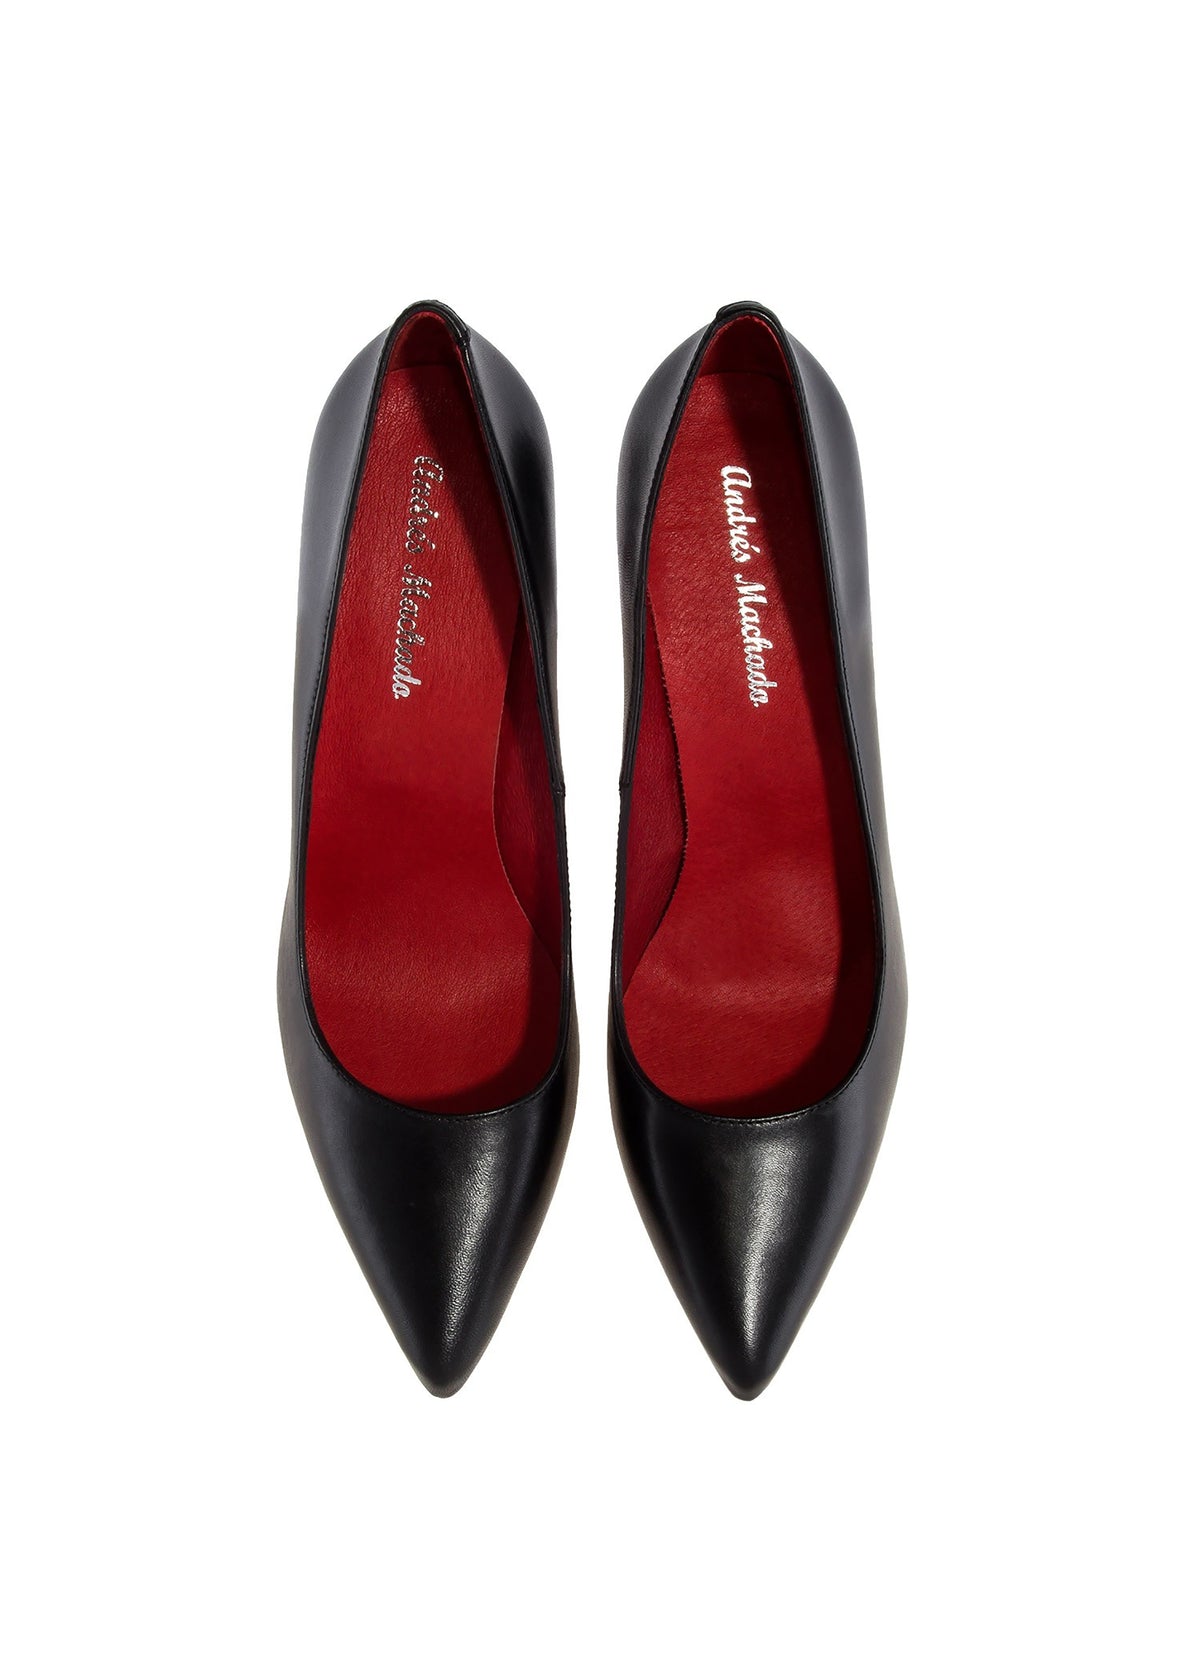 Stiletto heels - Diana, black leather